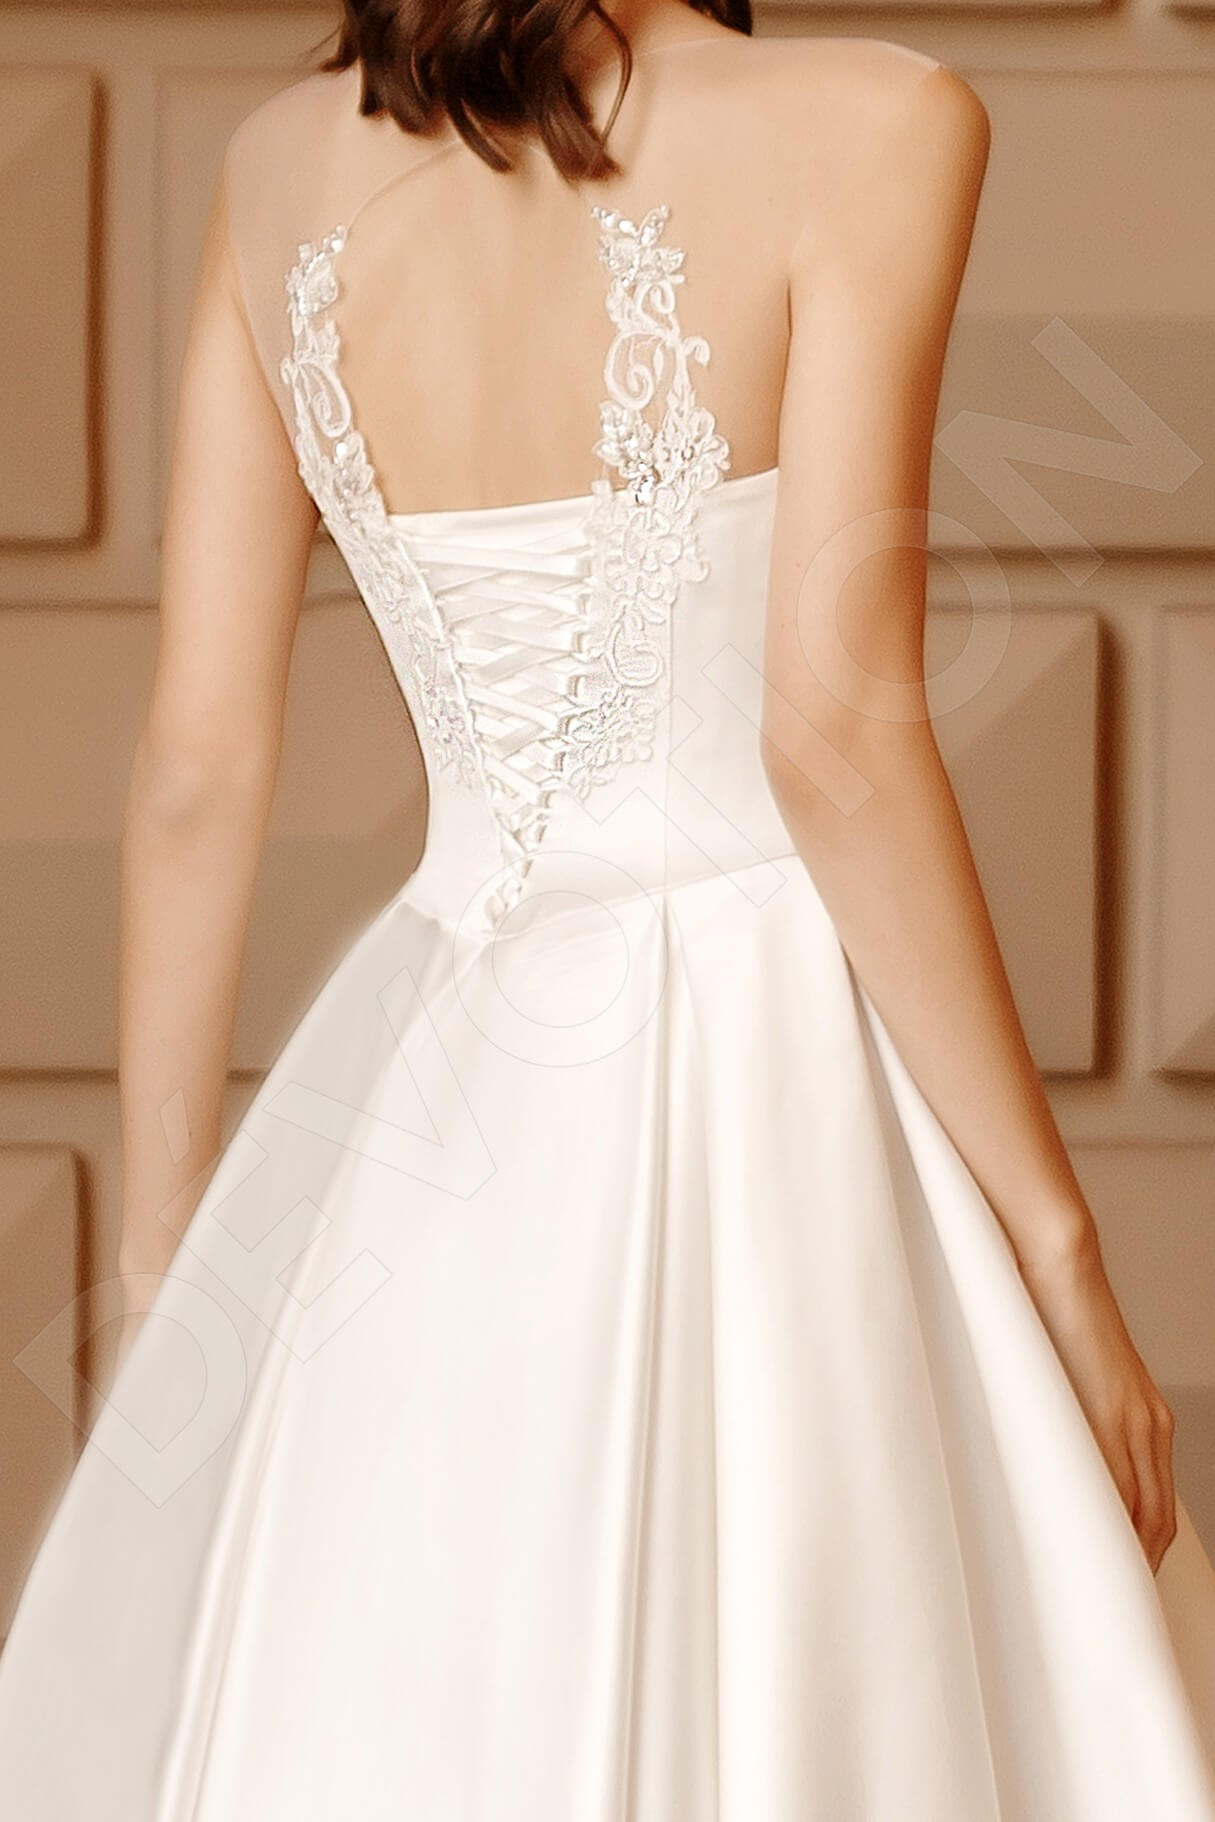 Gloria Princess/Ball Gown Illusion Ivory Wedding dress